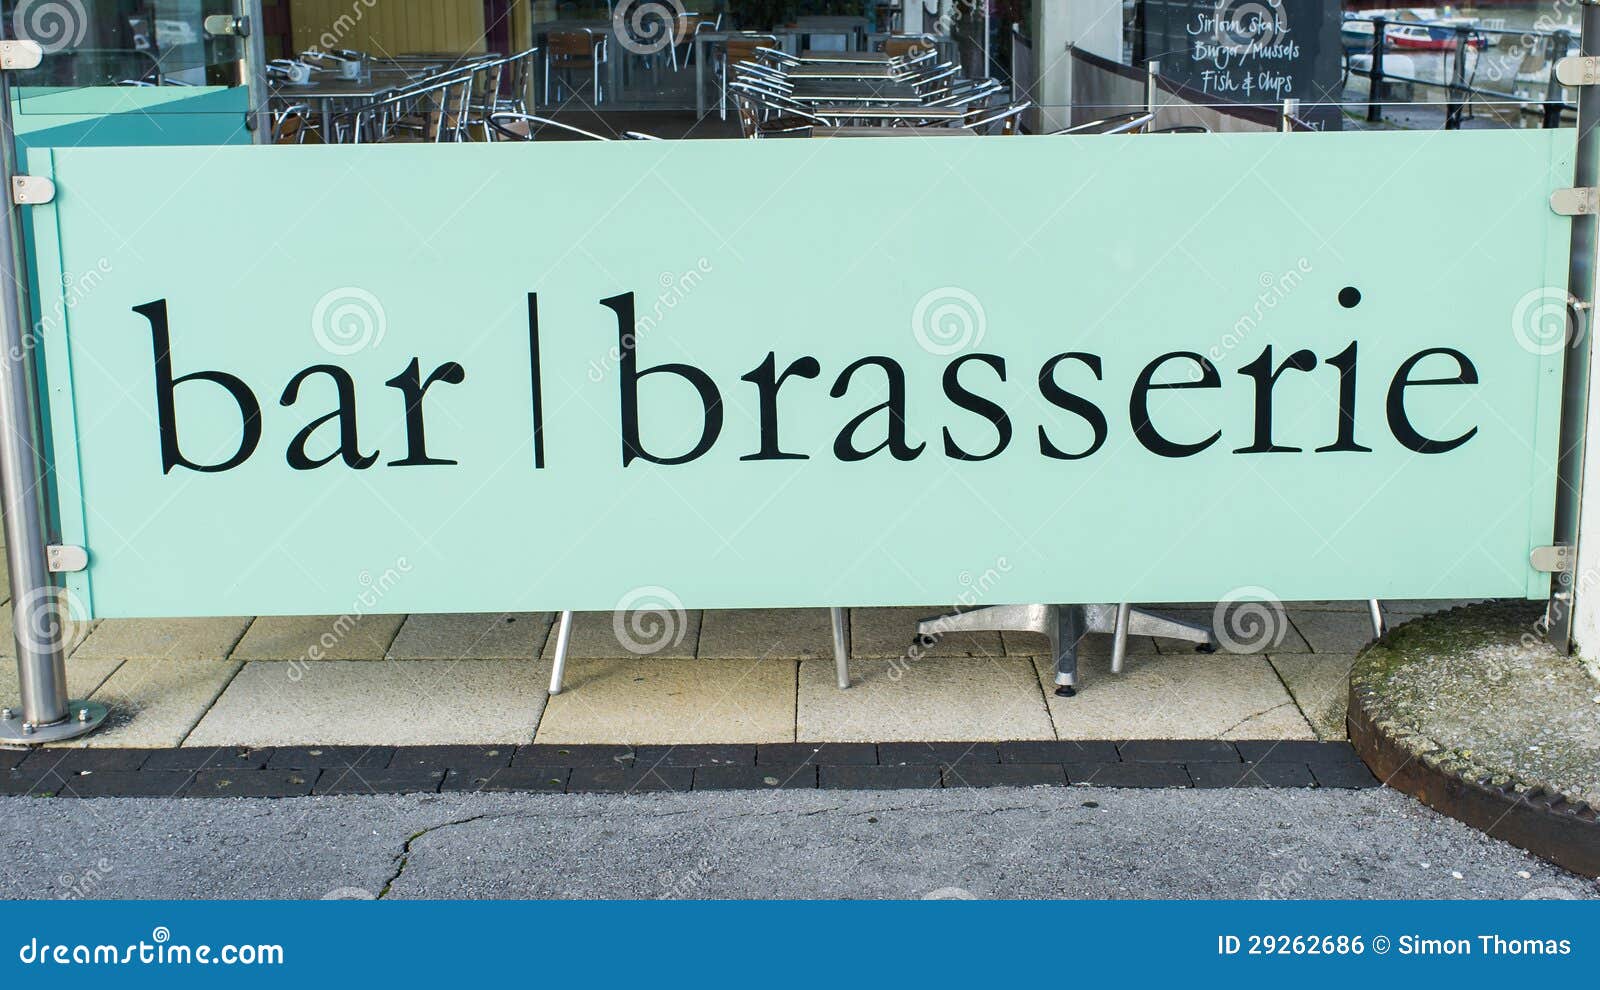 bar/brasserie sign